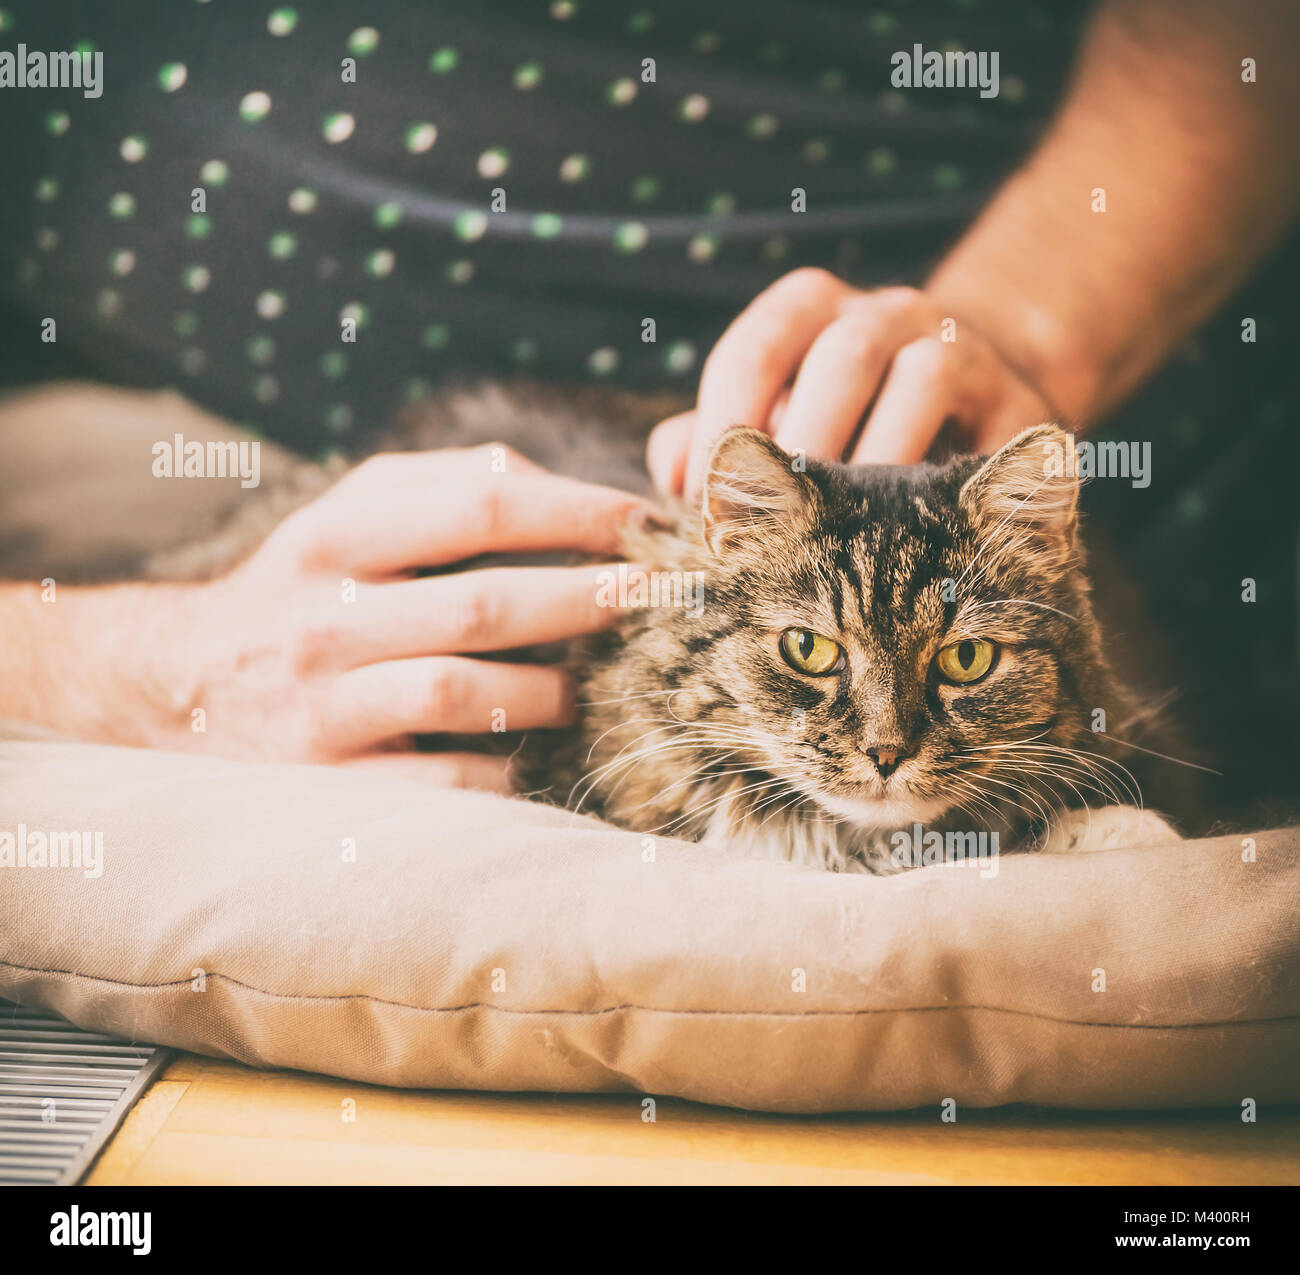 Male hands lay furry gray cat, cozy home scene Stock Photo